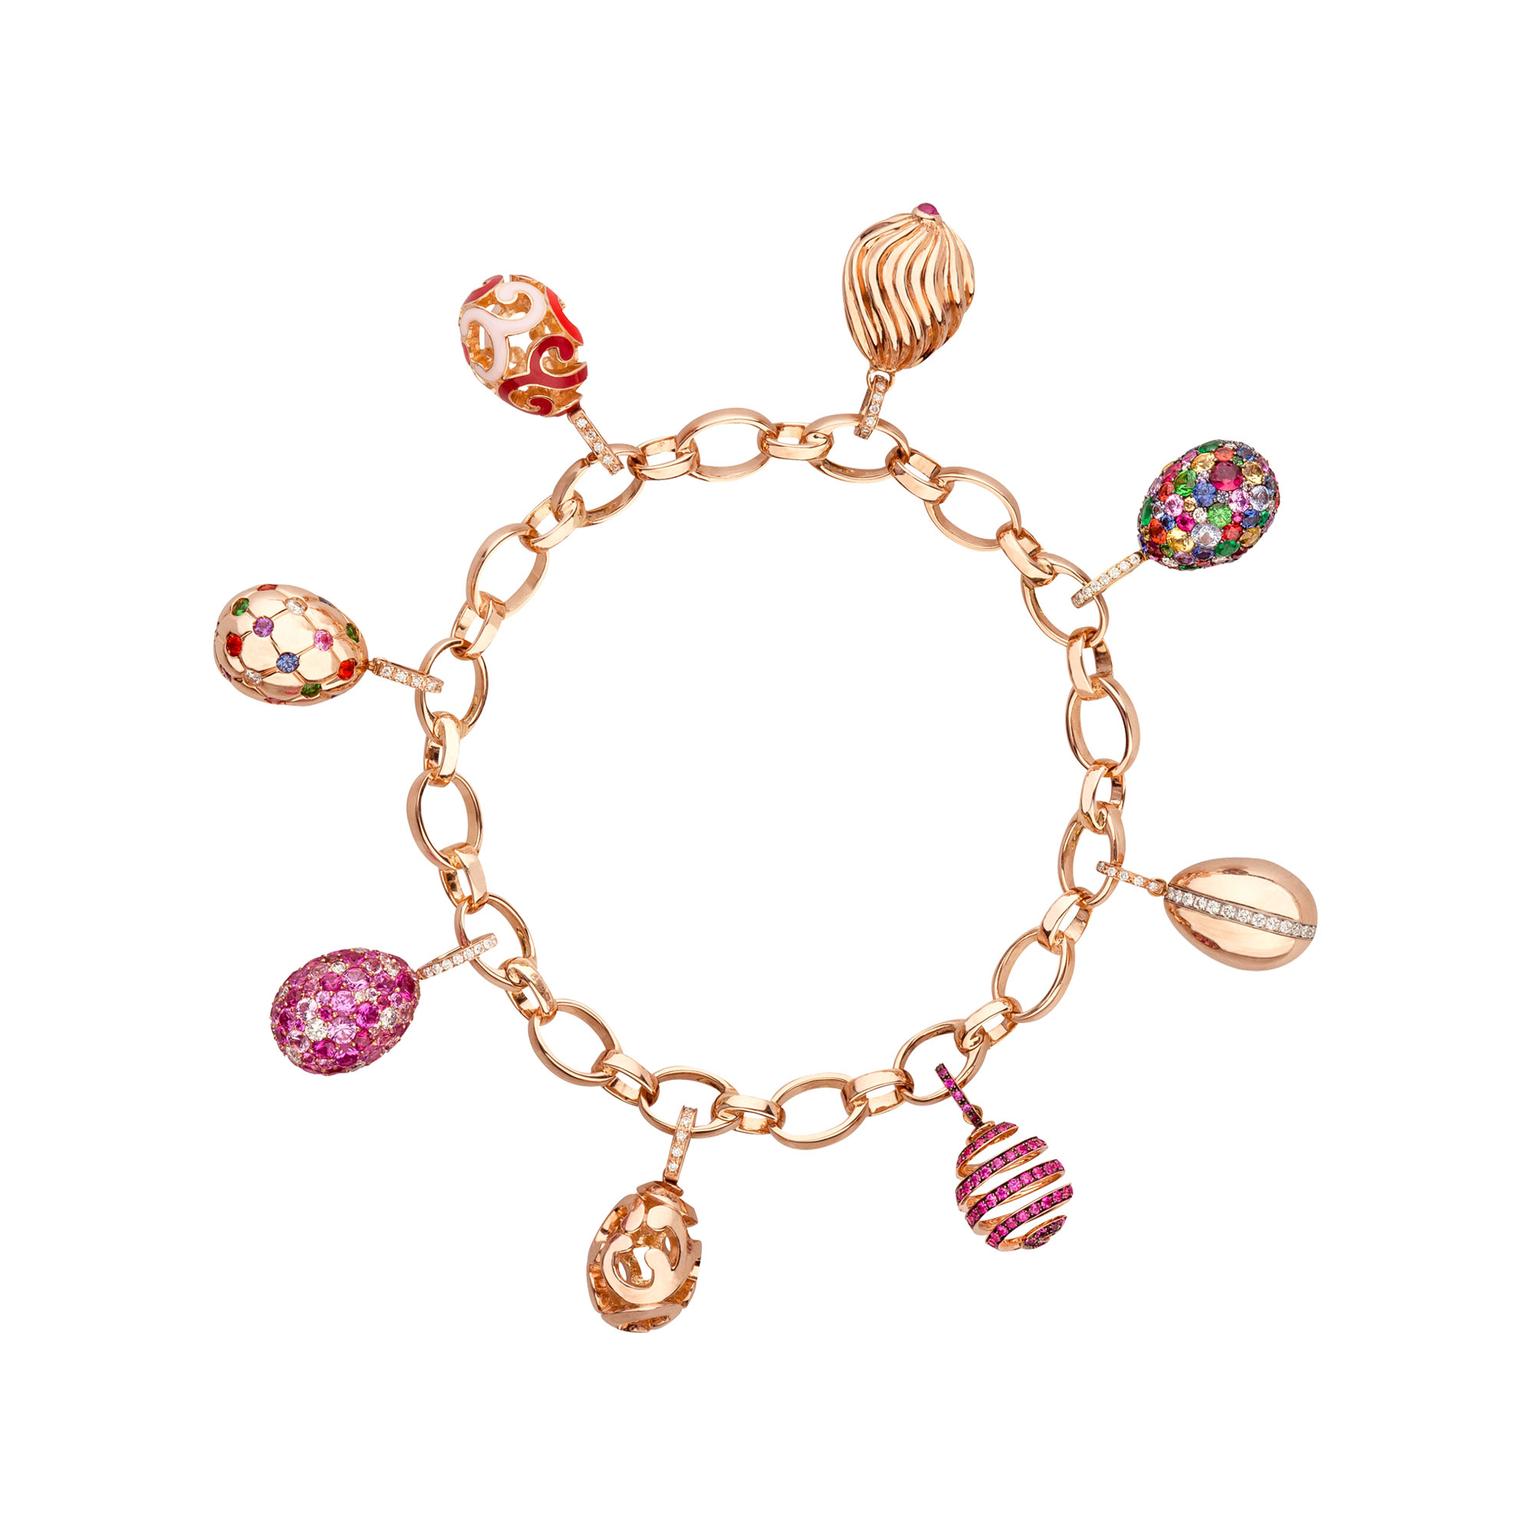 Fabergé egg charm bracelet